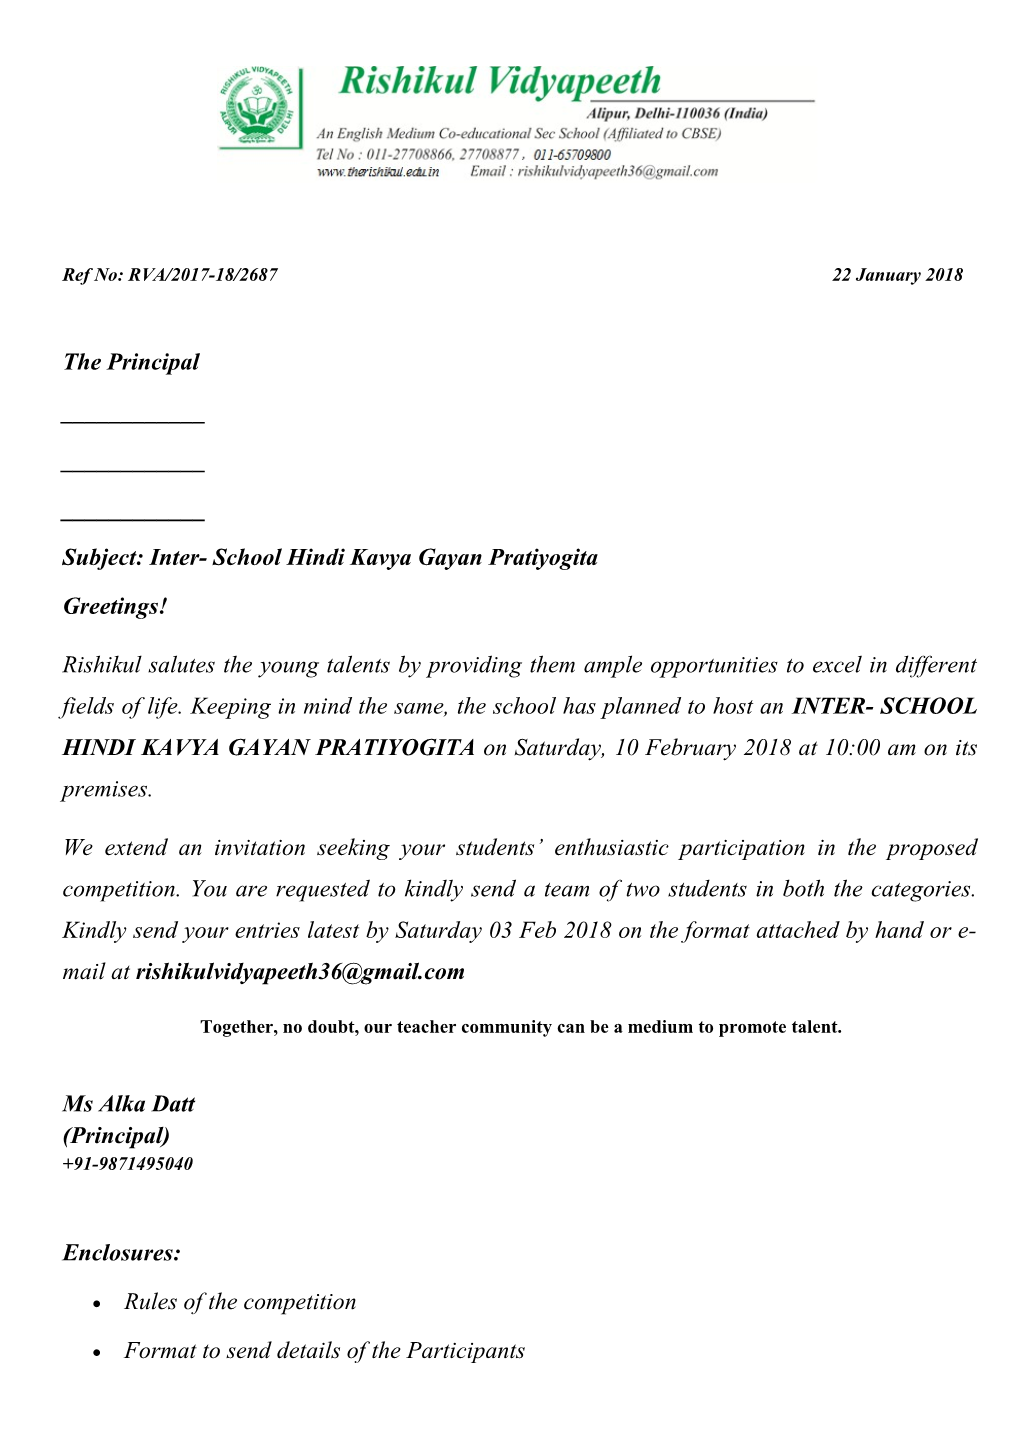 Subject: Inter- School Hindi Kavyagayanpratiyogita